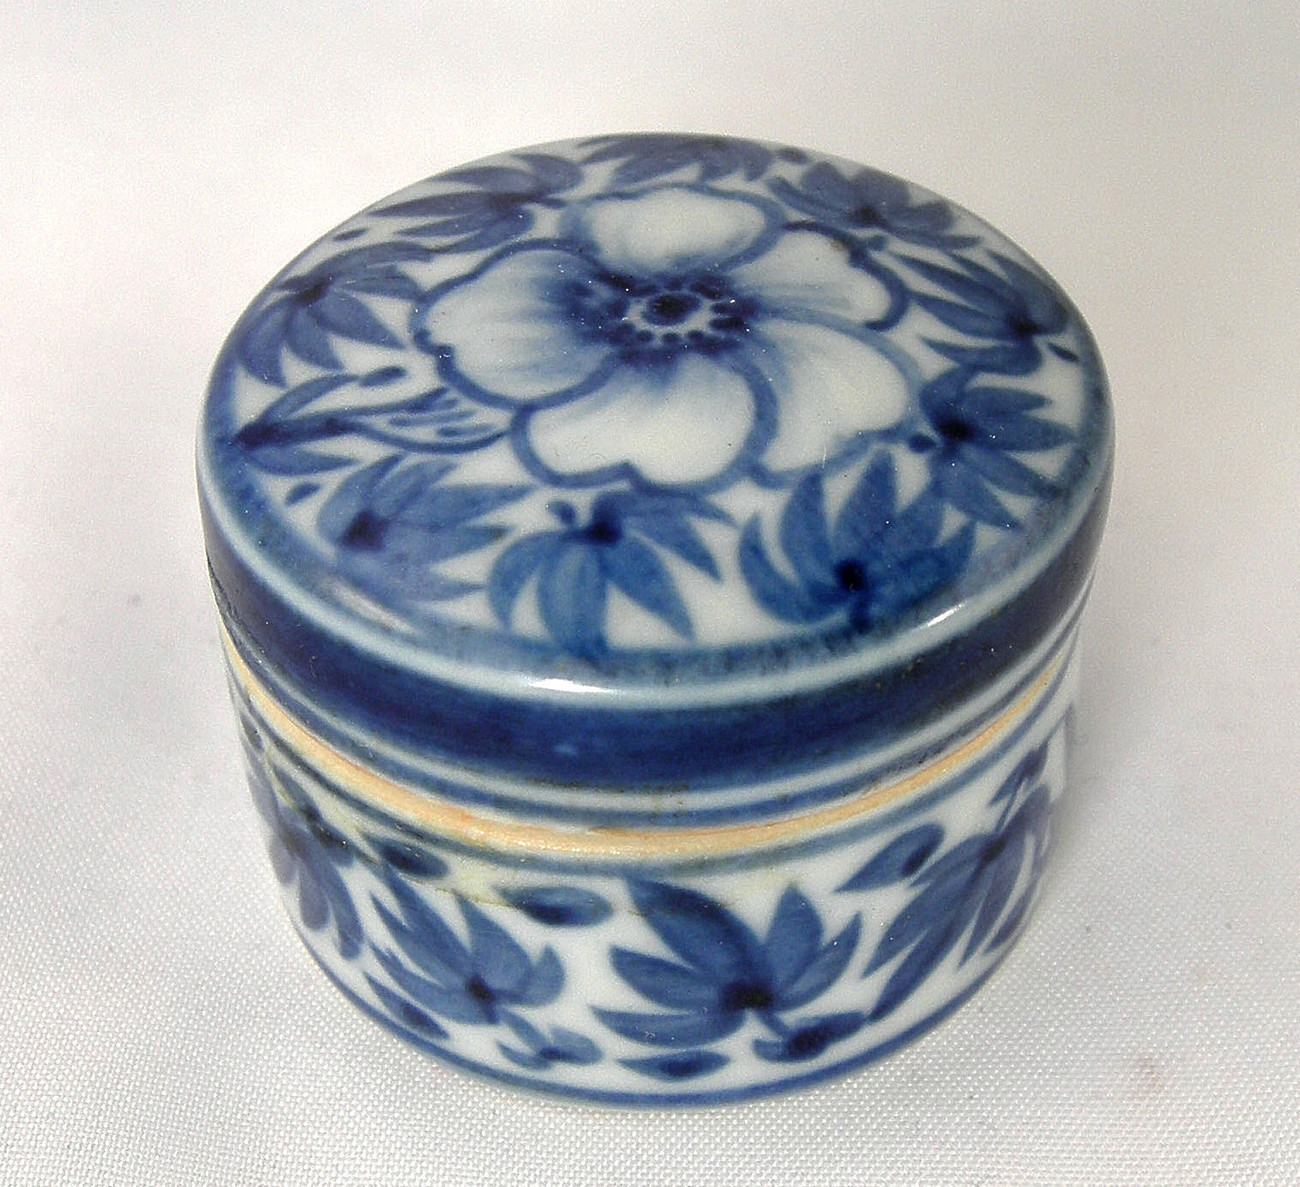 Trinket Box - Blue & White Floral Porcelain - Delft - $5.00